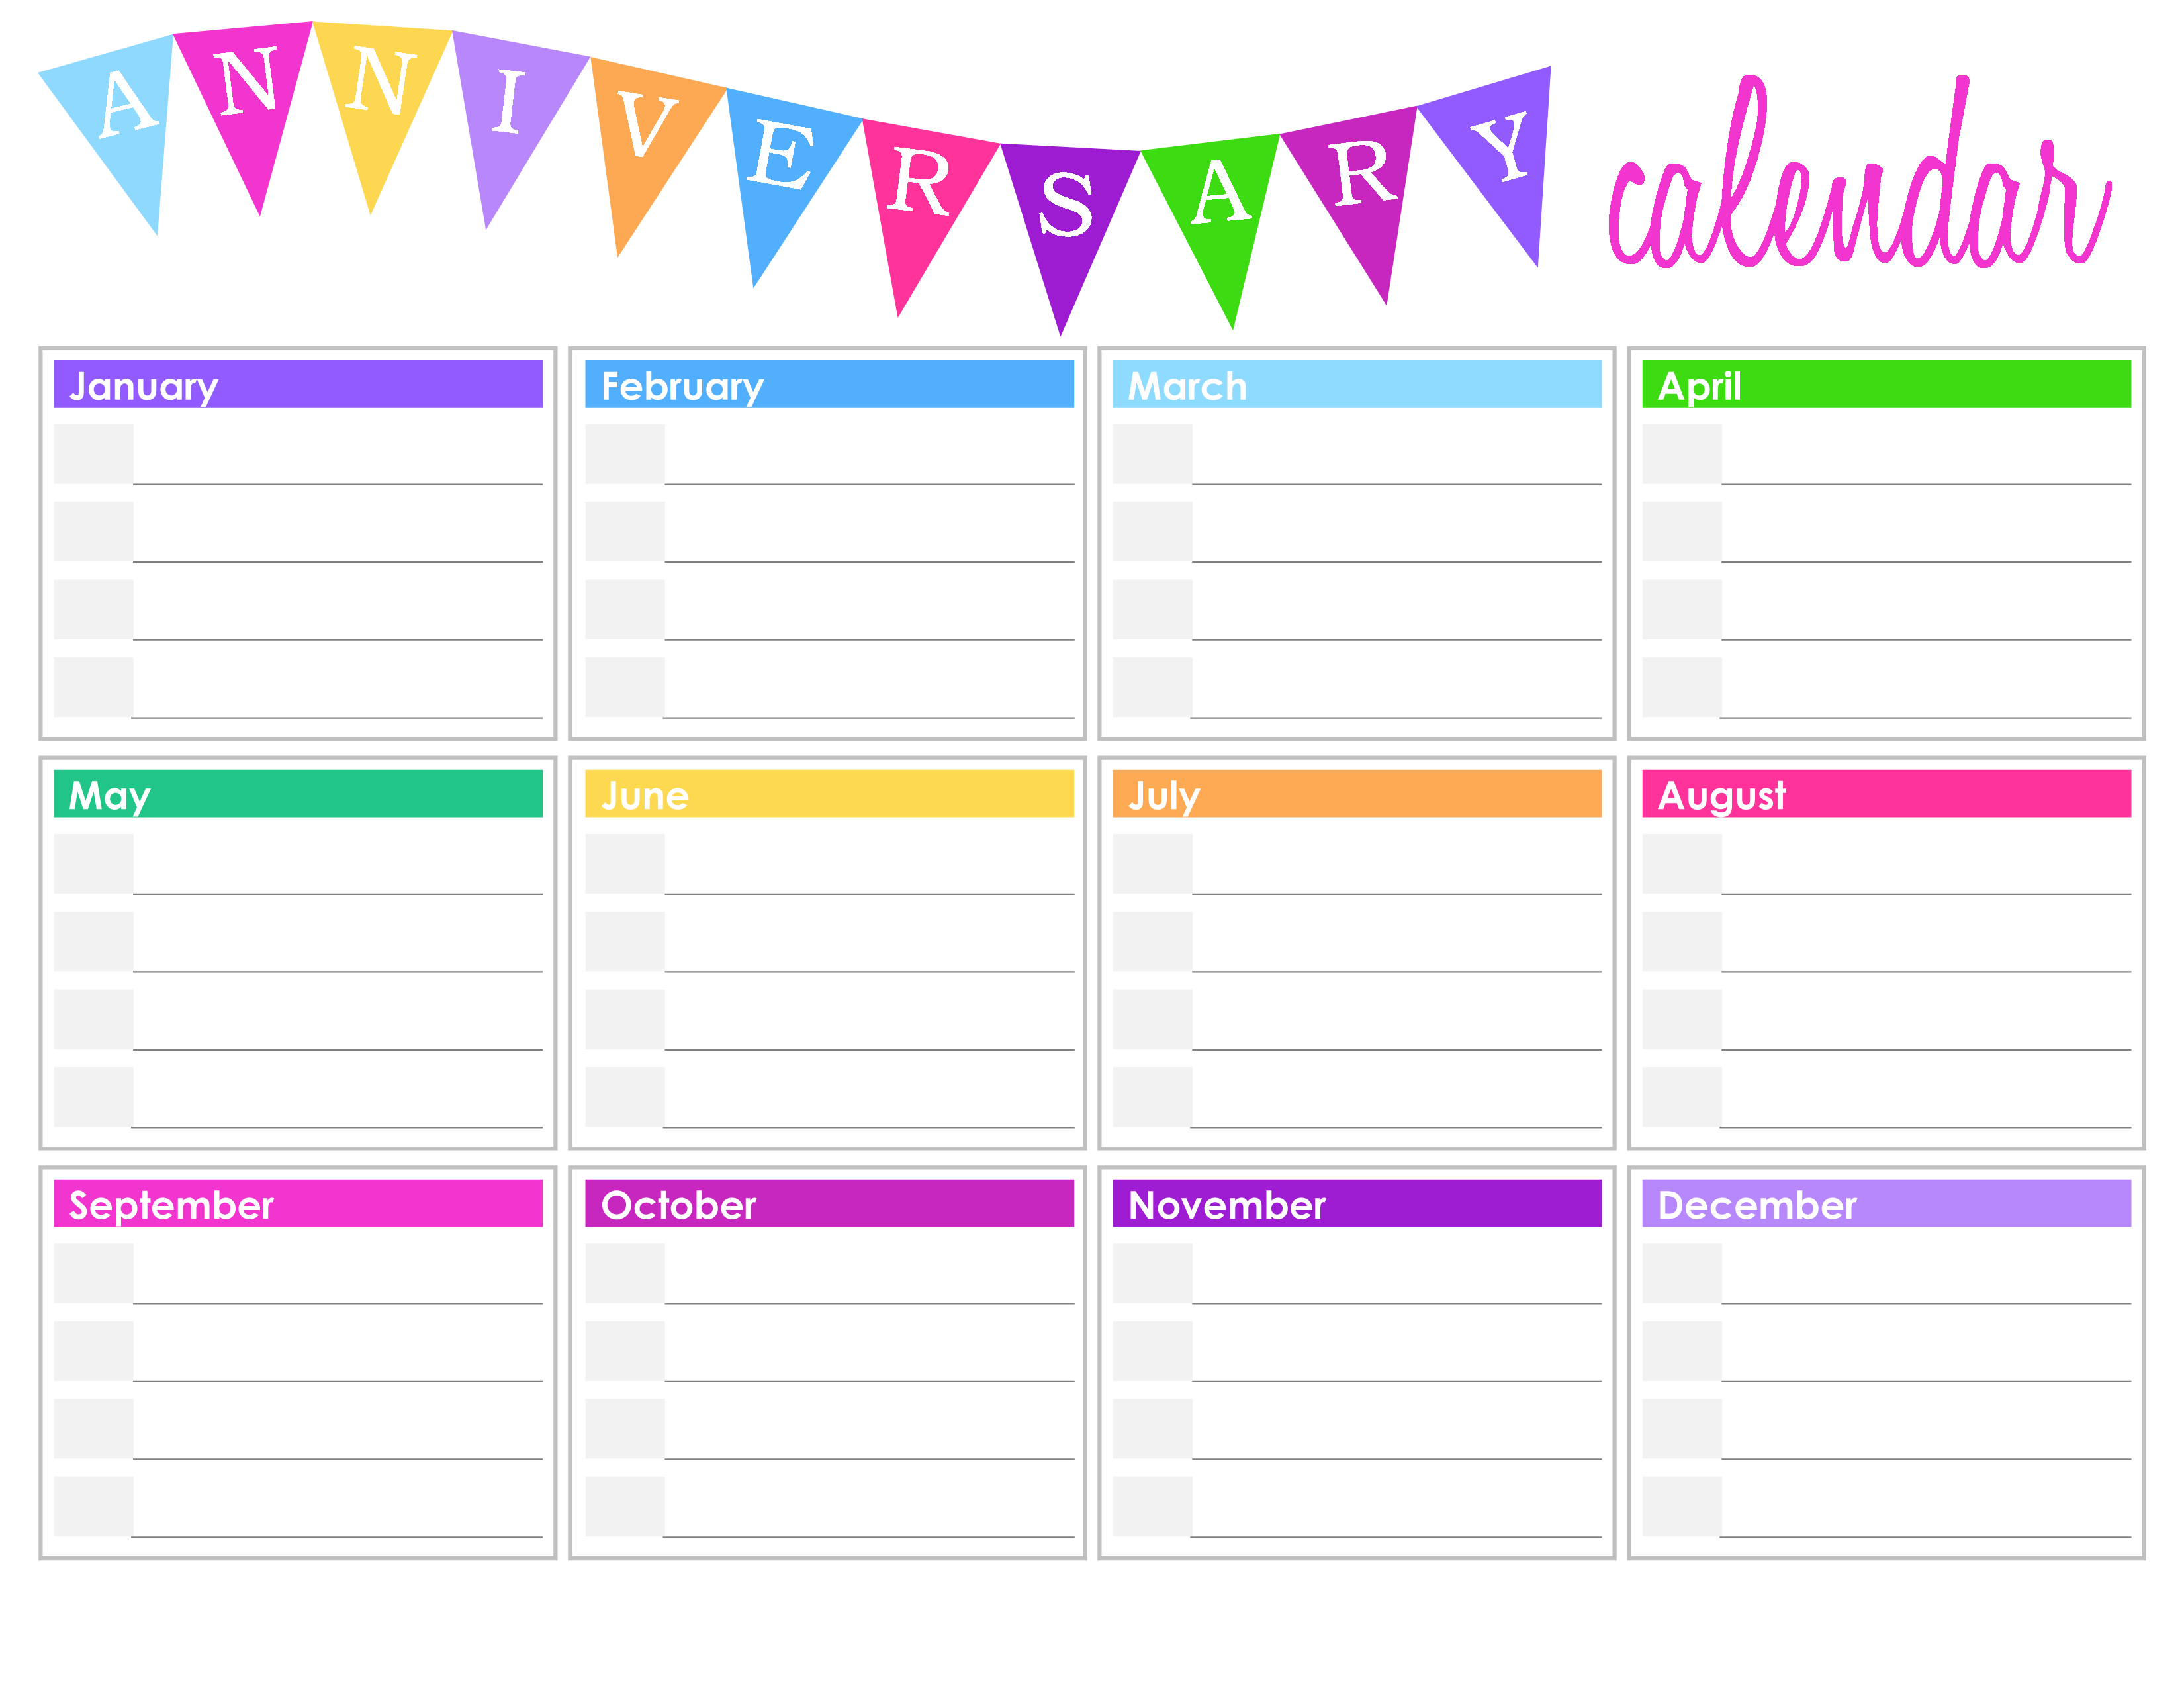 birthday-anniversary-calendar-allbusinesstemplates